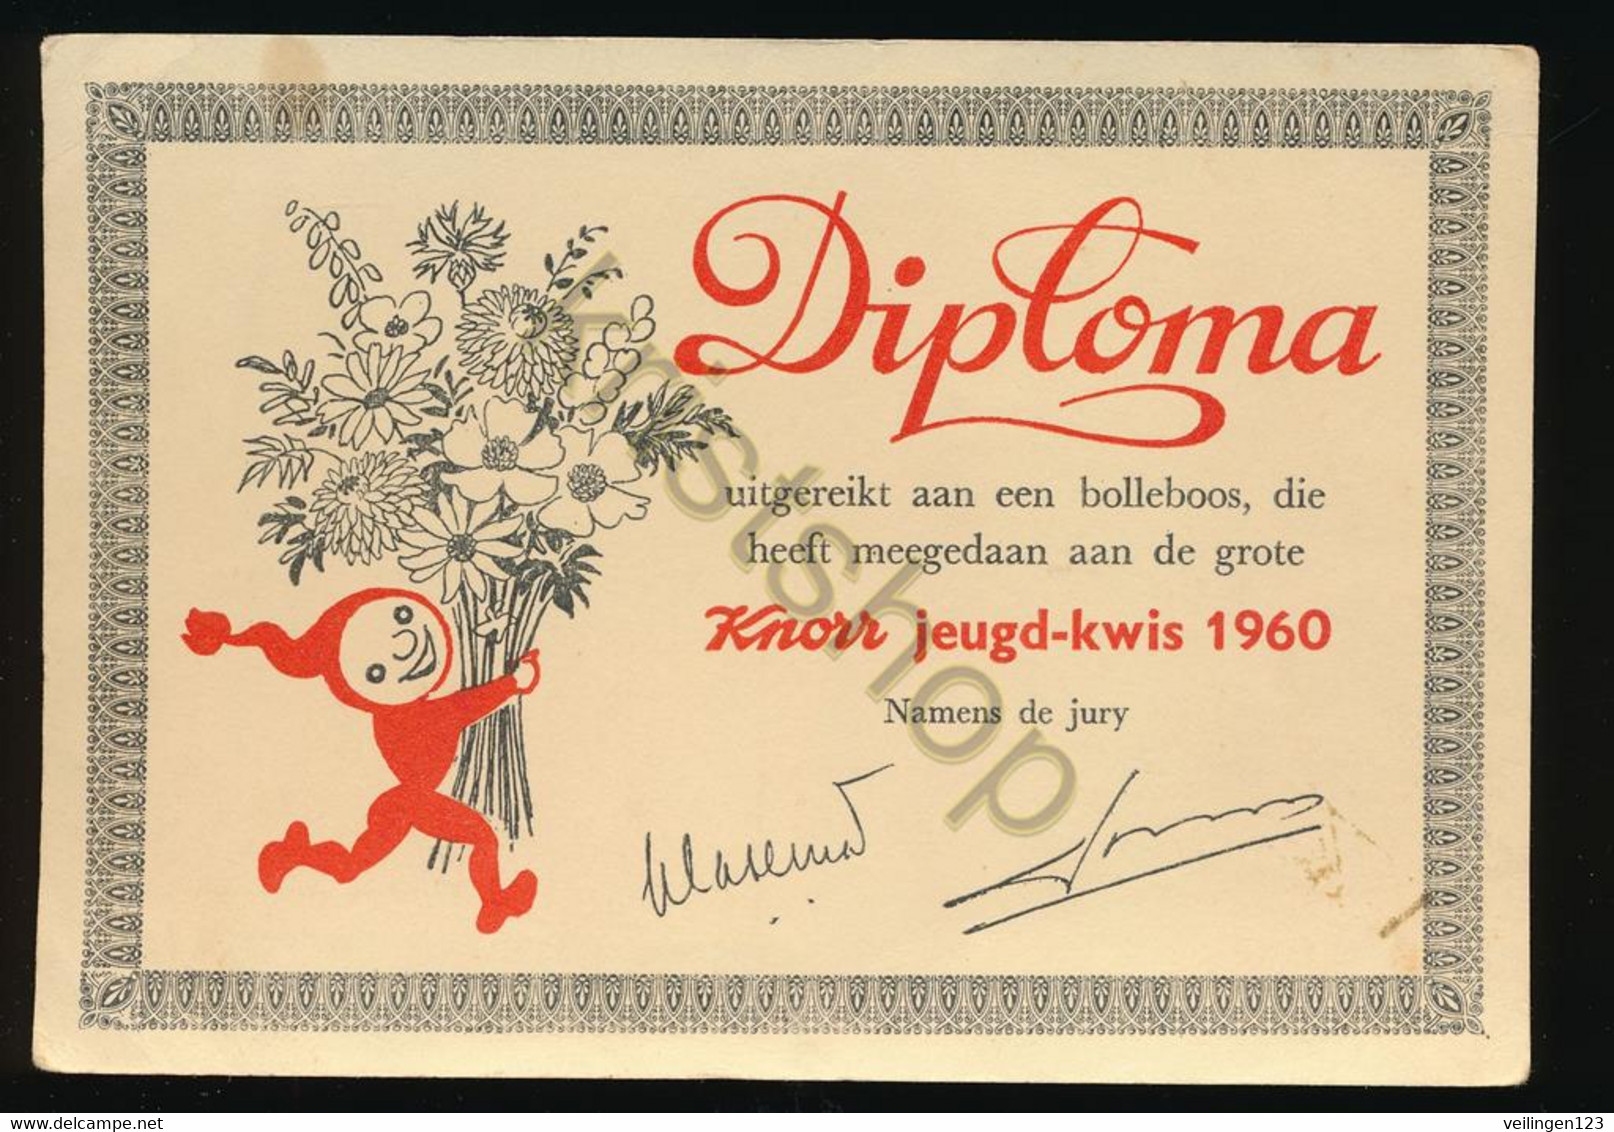 Reclamekaart - Diploma - Knorr Jeugd-kwis 1960 [Z20-0.306 - Advertising